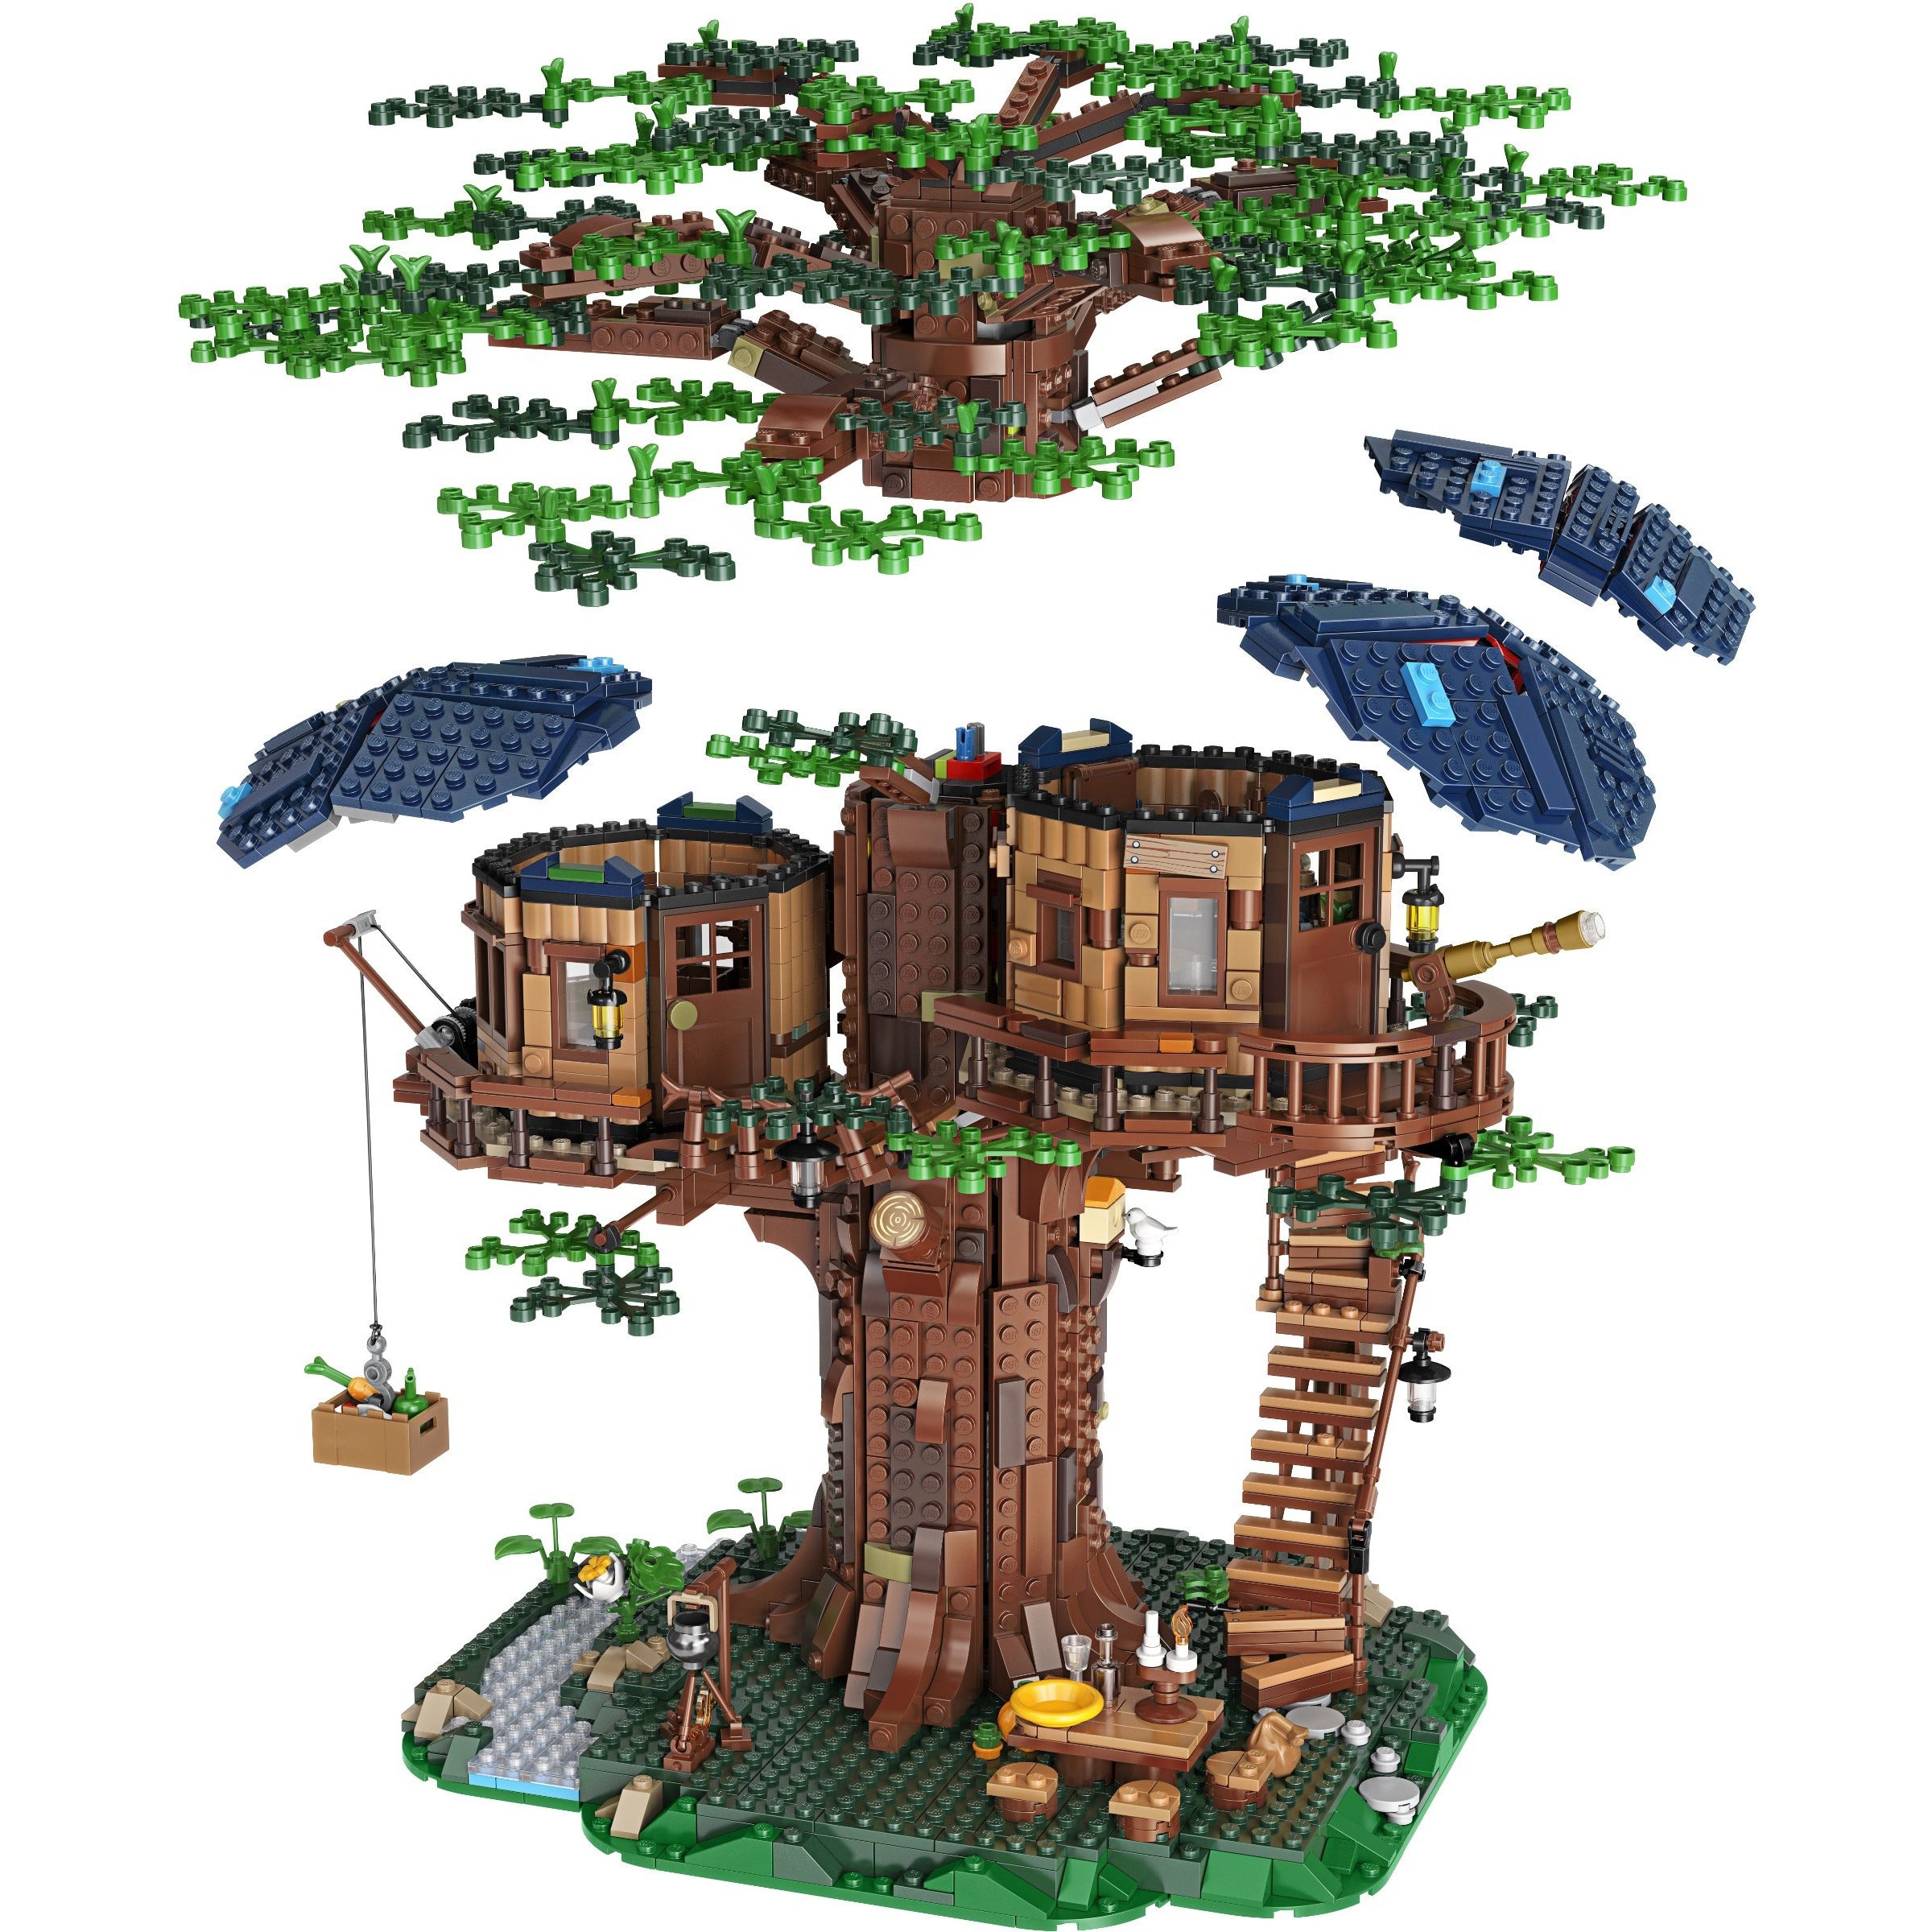 Lego Ideas: Treehouse 21318